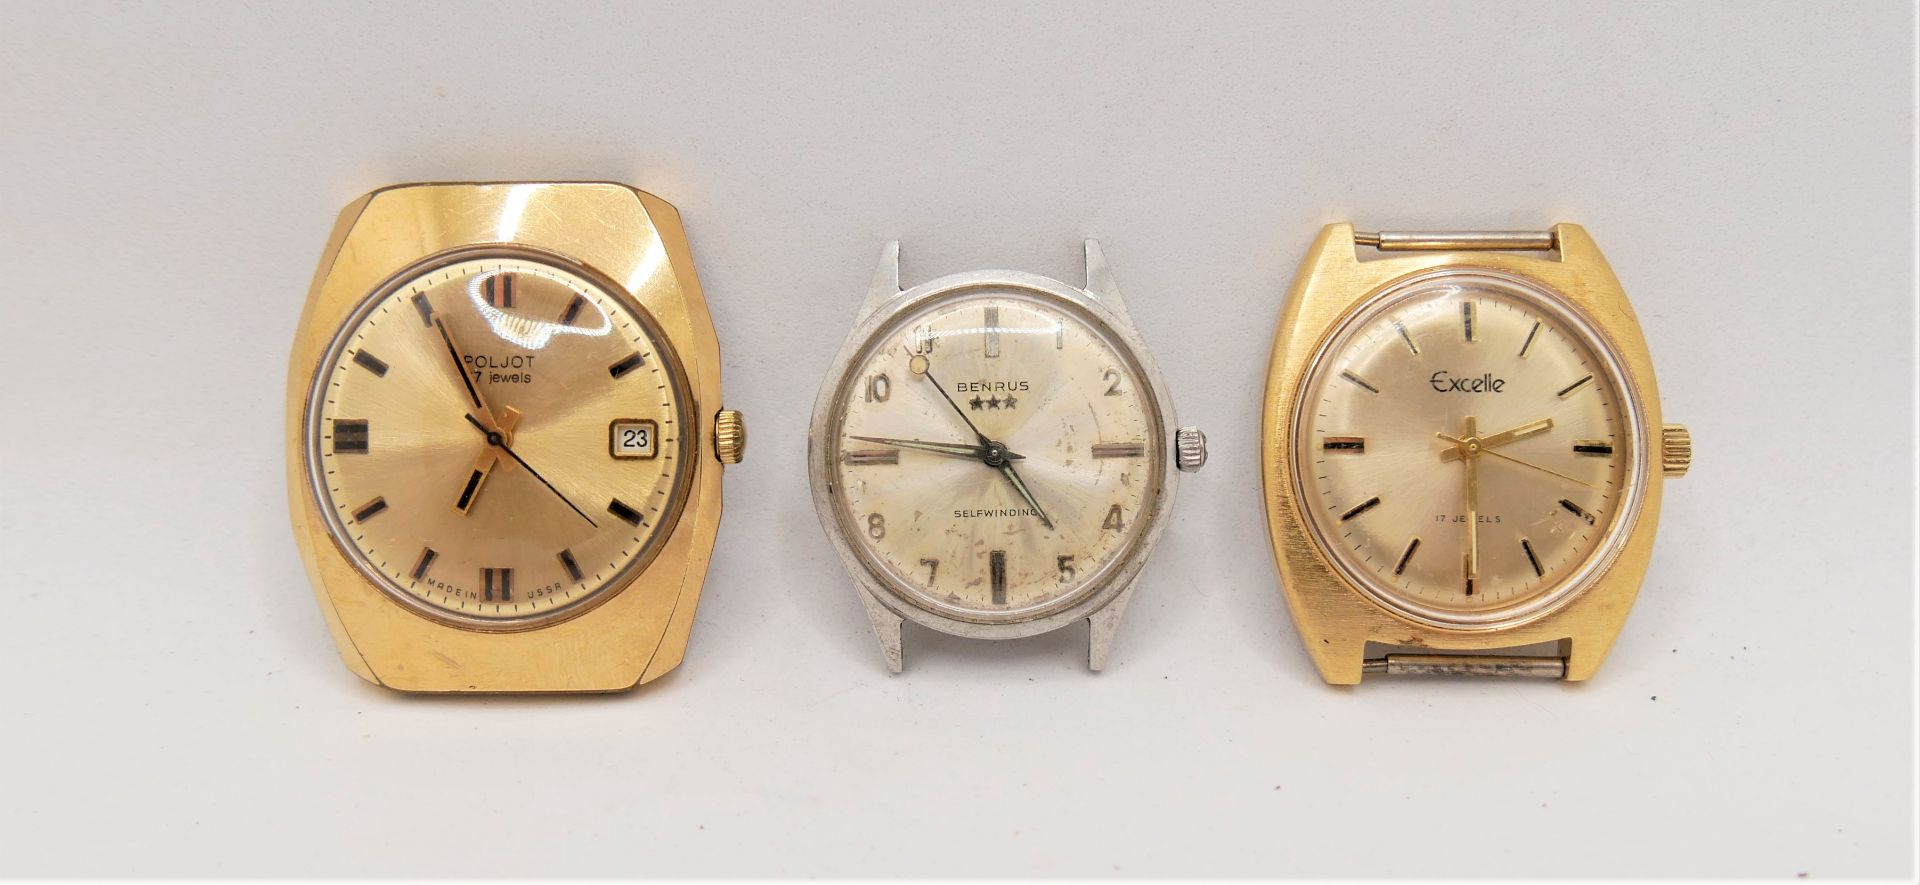 3 ausgefallene Herrenarmbanduhren, bestehend aus 1 Poljot 17 Jewels, 1x Benrus Selfwinding und 1x